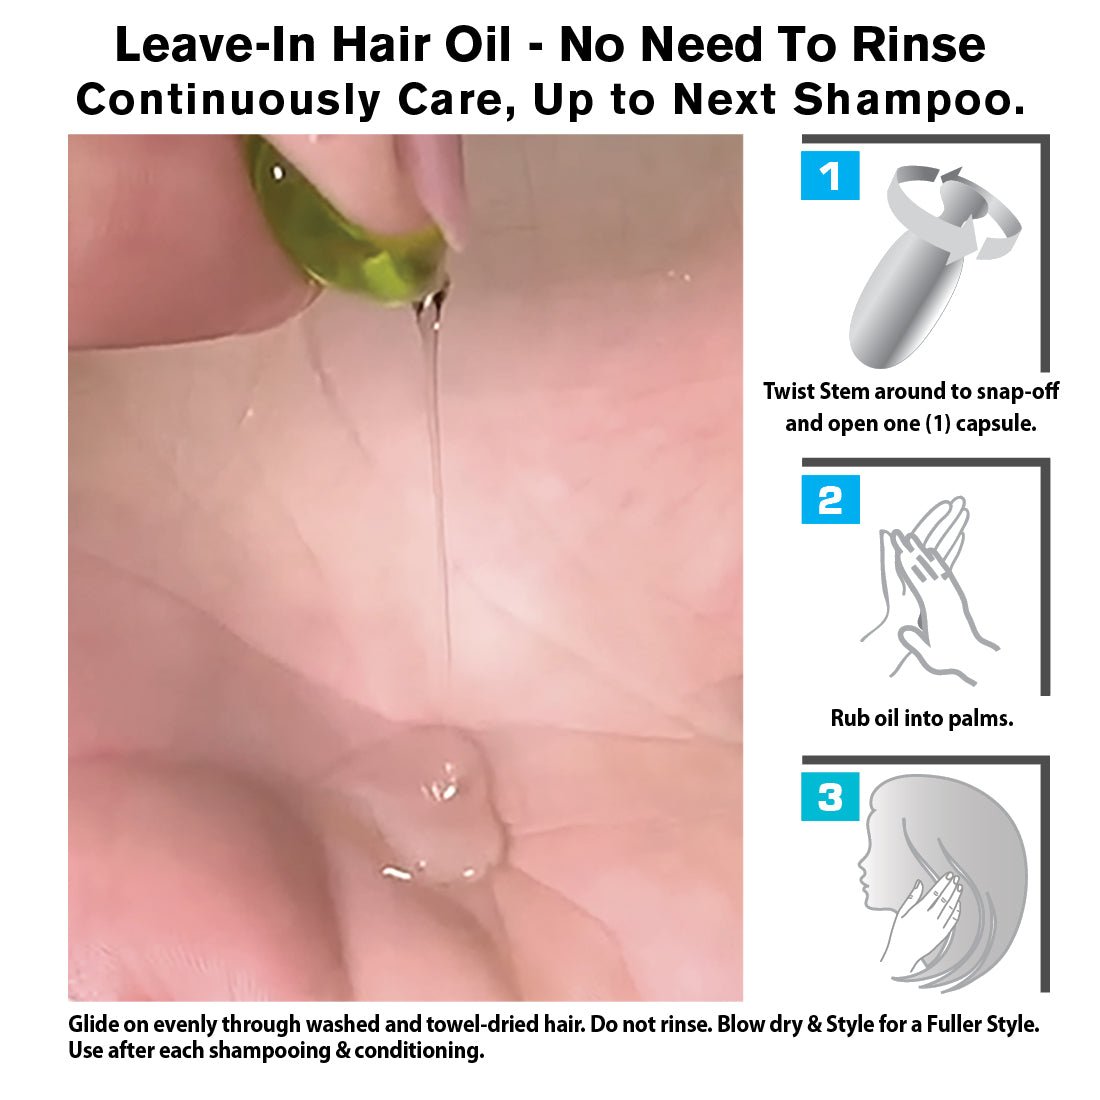 BODYDENSE Intensive Leave-In Hair Oil with Argan Oil, Hyaluronic Acid, Panthenol, Biotin, Aloe &amp; Vitamins - SNOBGIRLS Australia